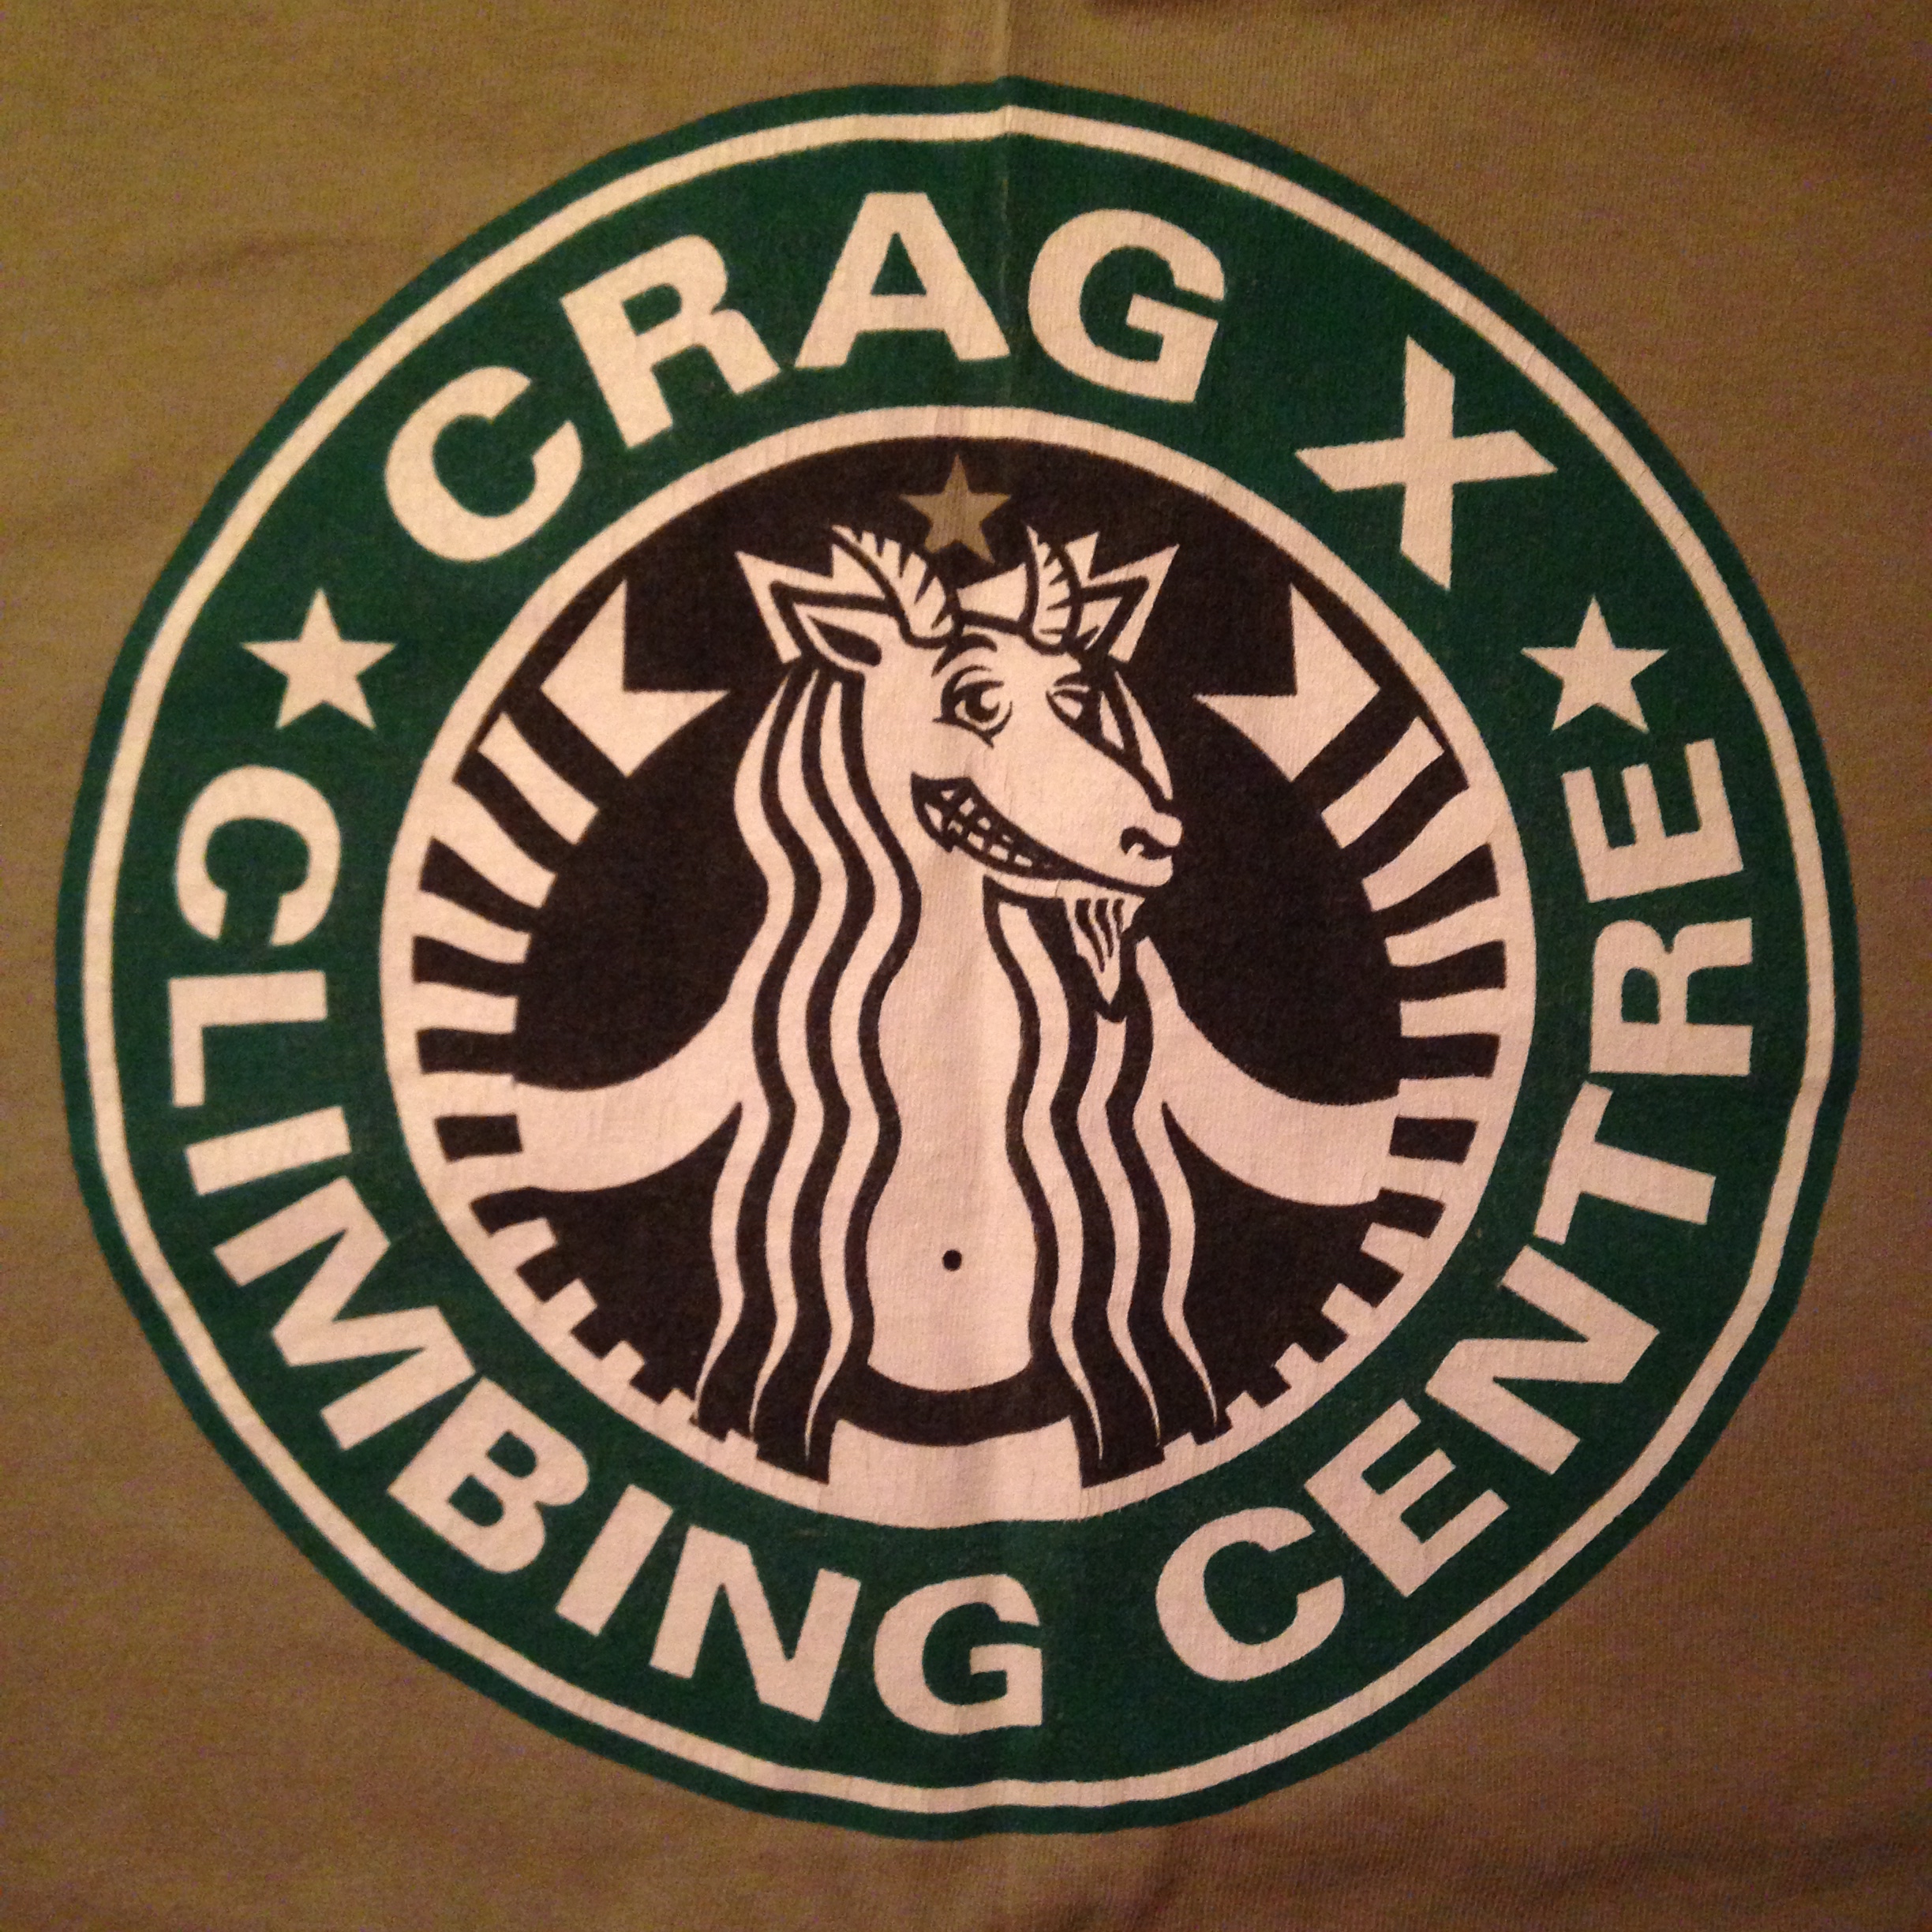 Crag X Cofee.jpg